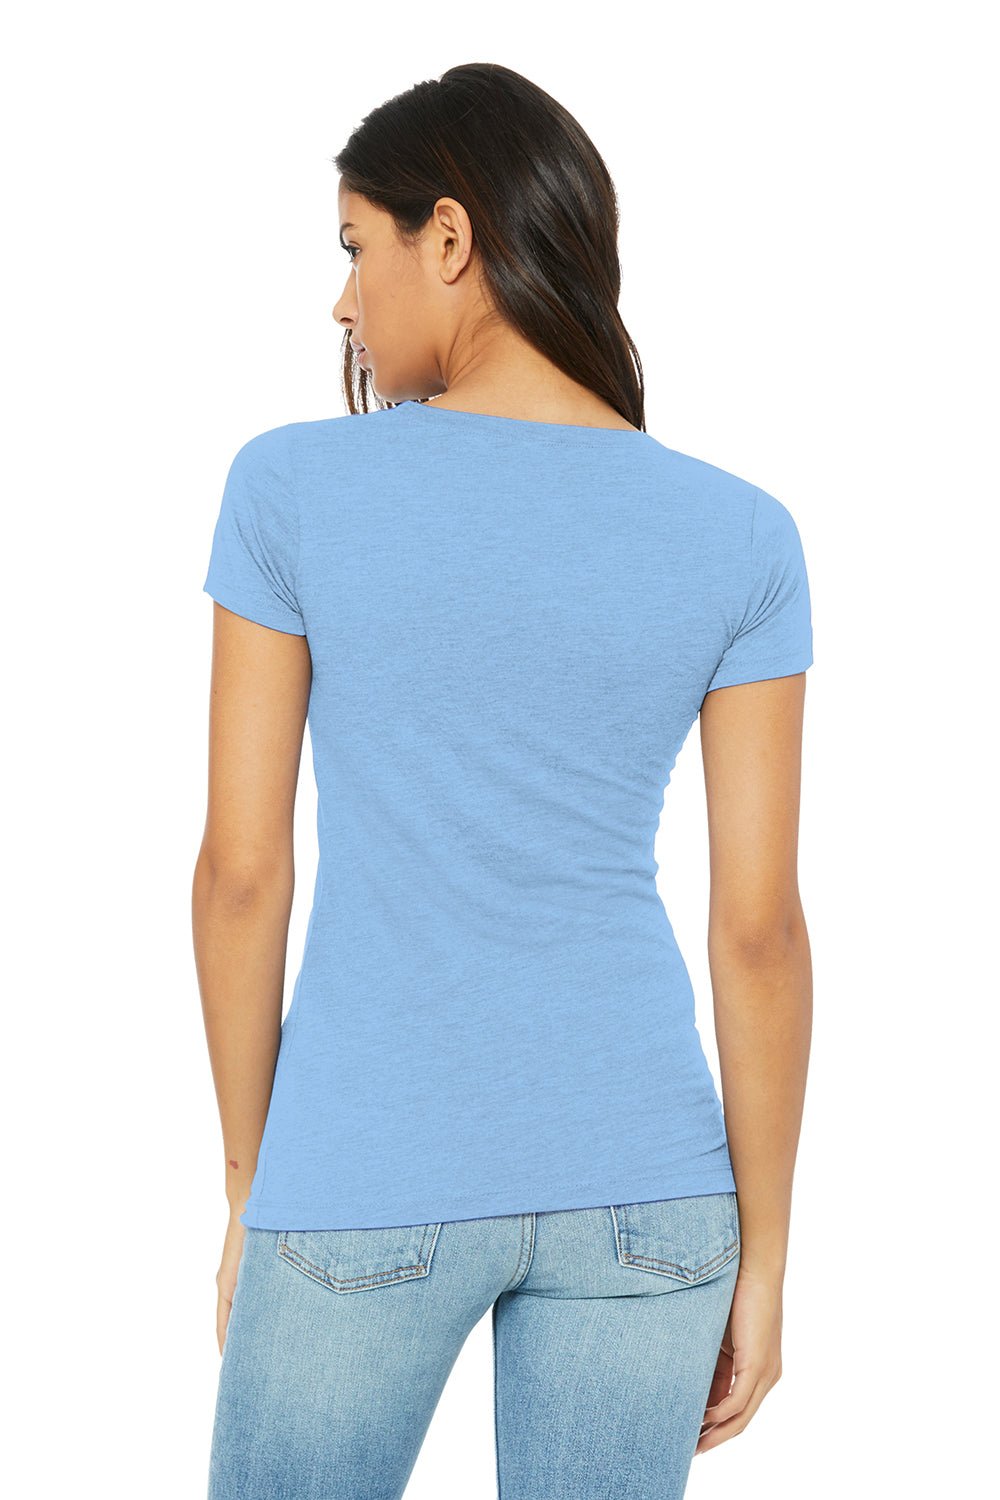 Bella + Canvas BC6004/6004 Womens The Favorite Short Sleeve Crewneck T-Shirt Baby Blue Model Back